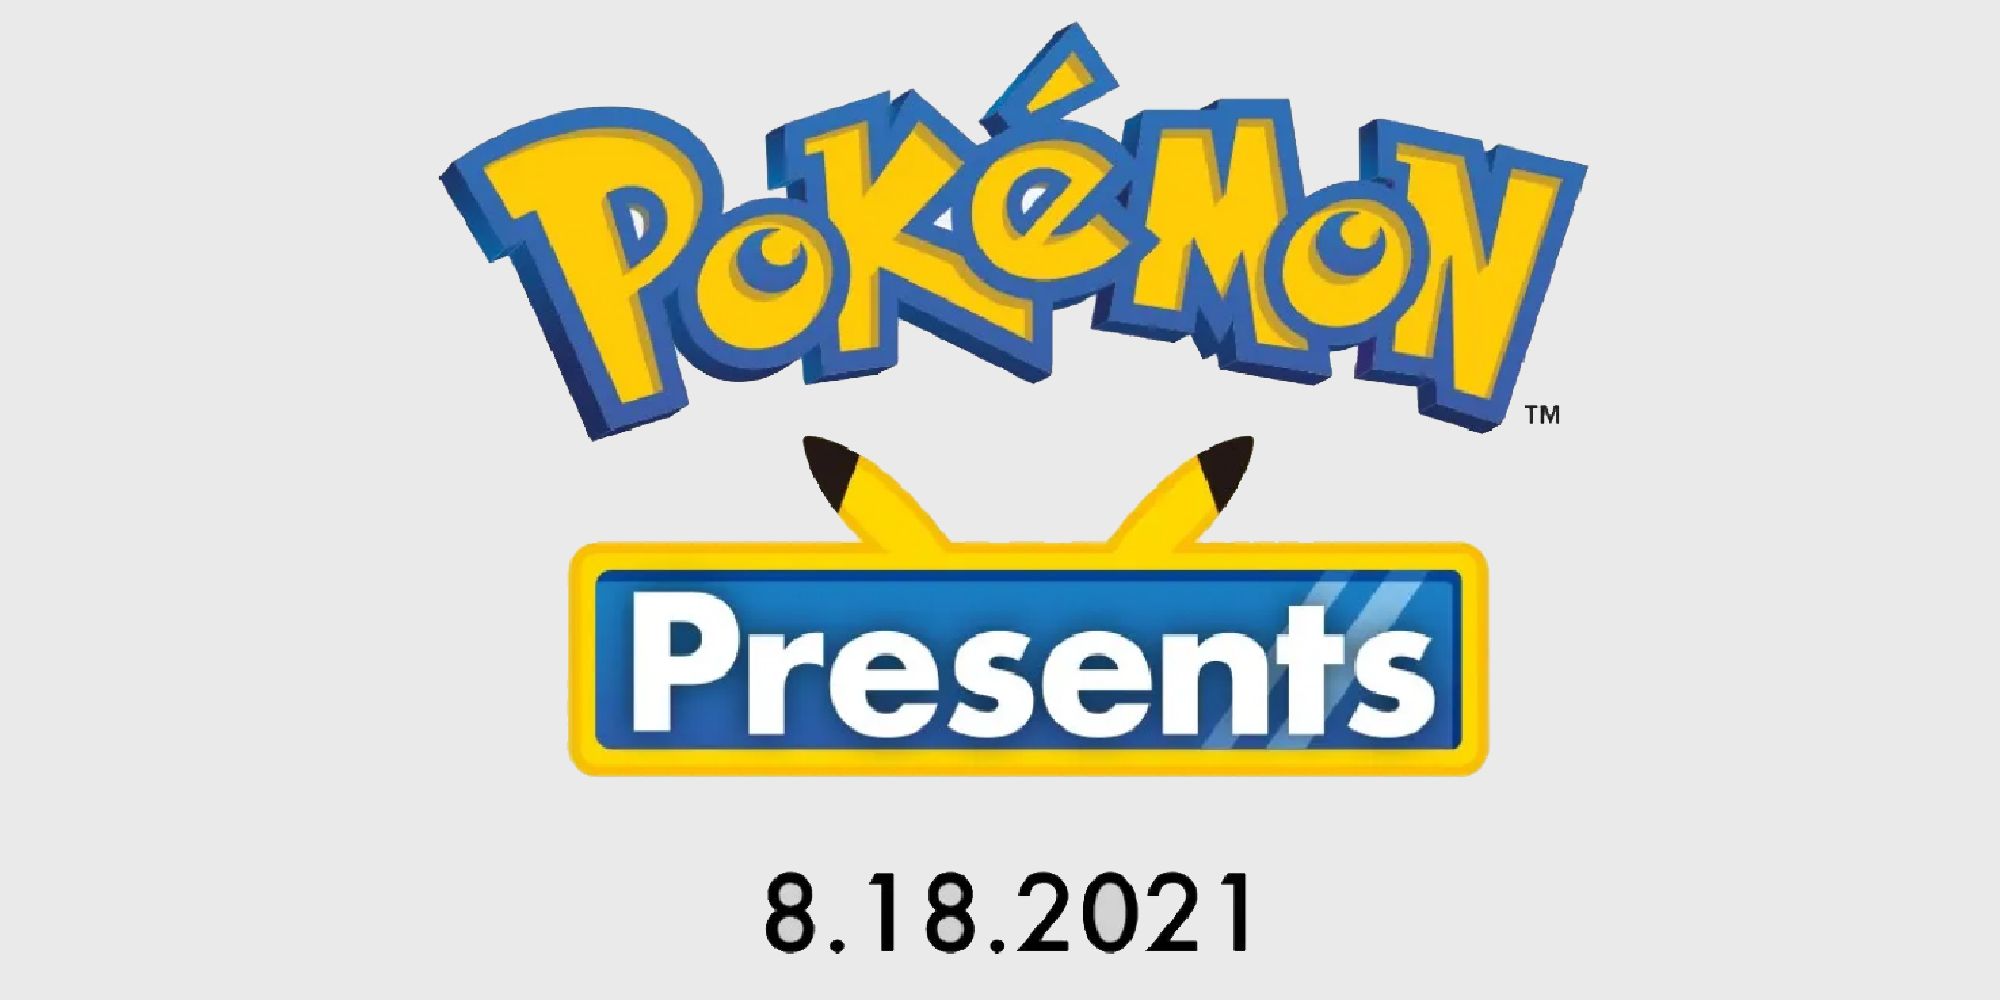 Where To Watch Today's Pokémon Presents Livestream